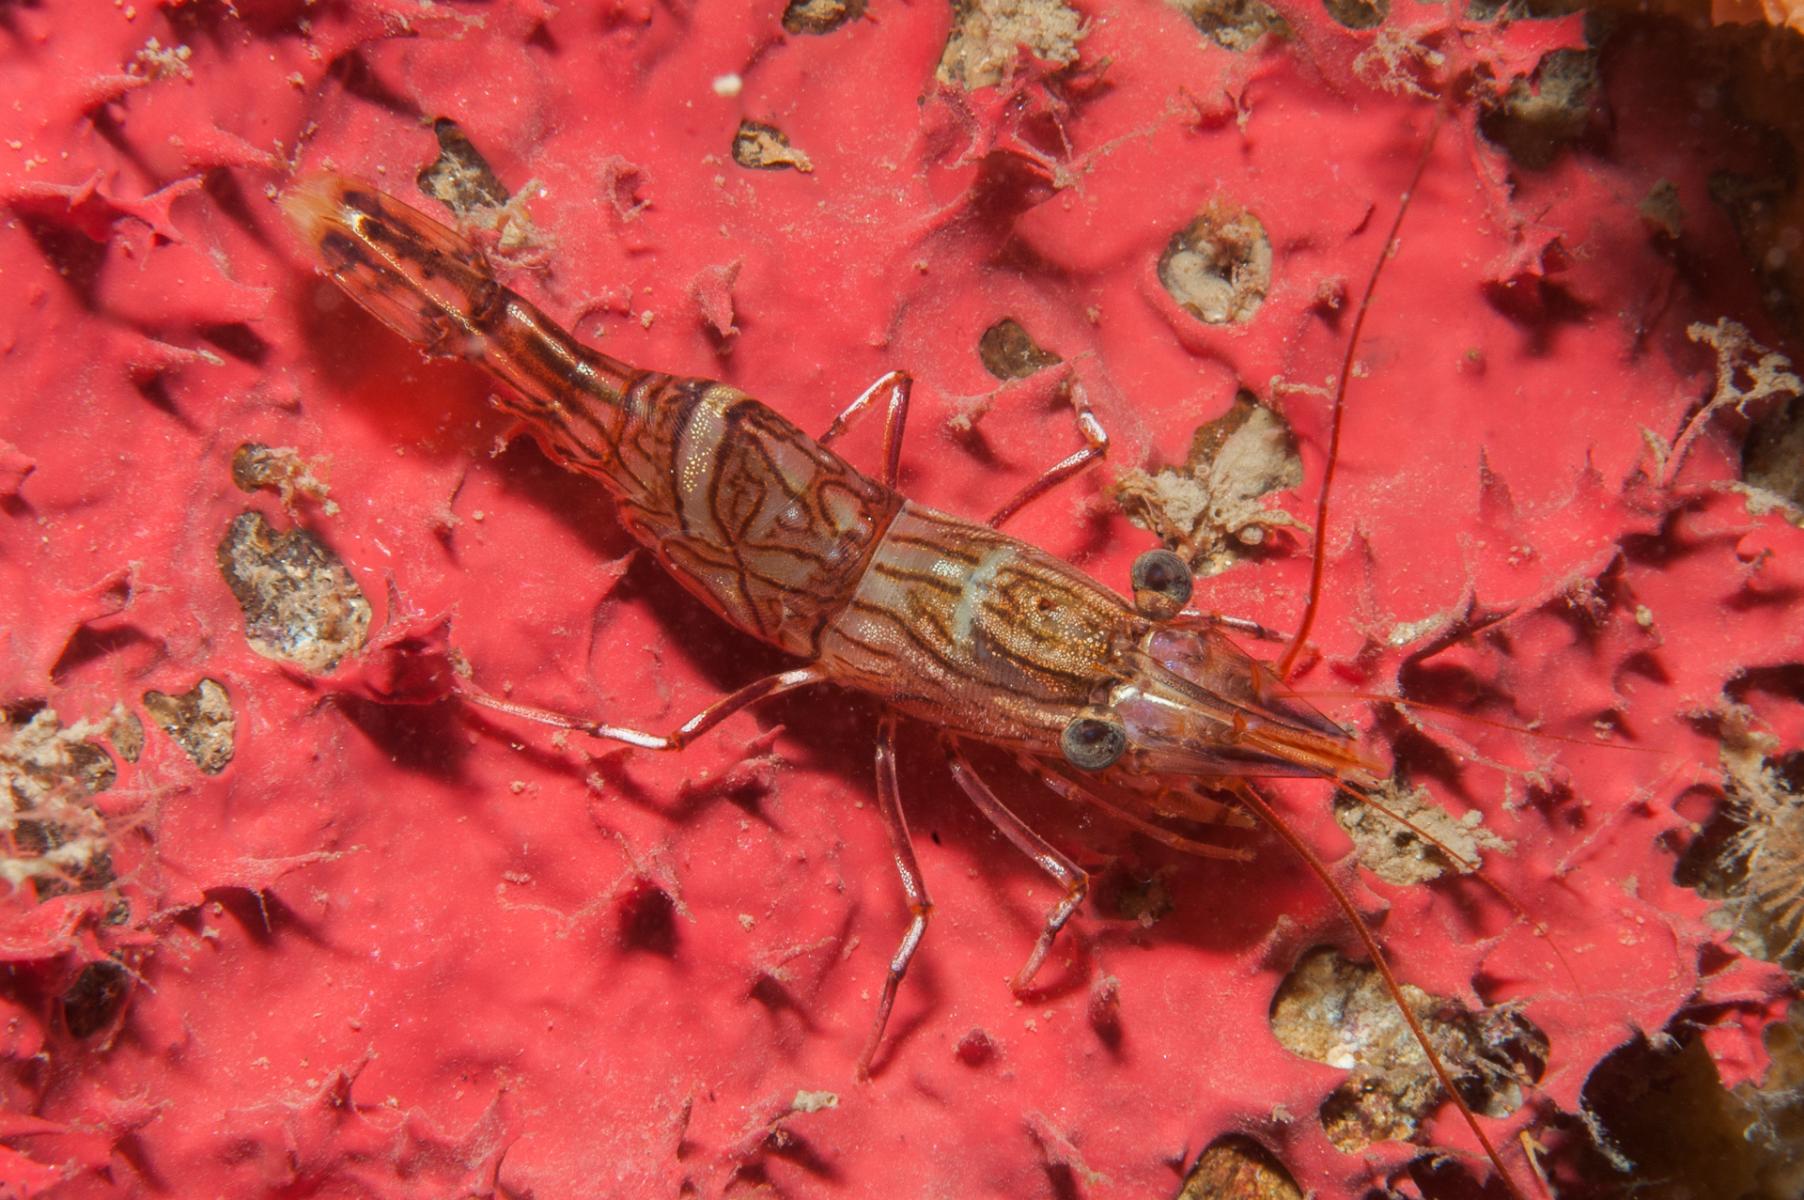 Rhynchocinetes australis: hinge-beak shrimp